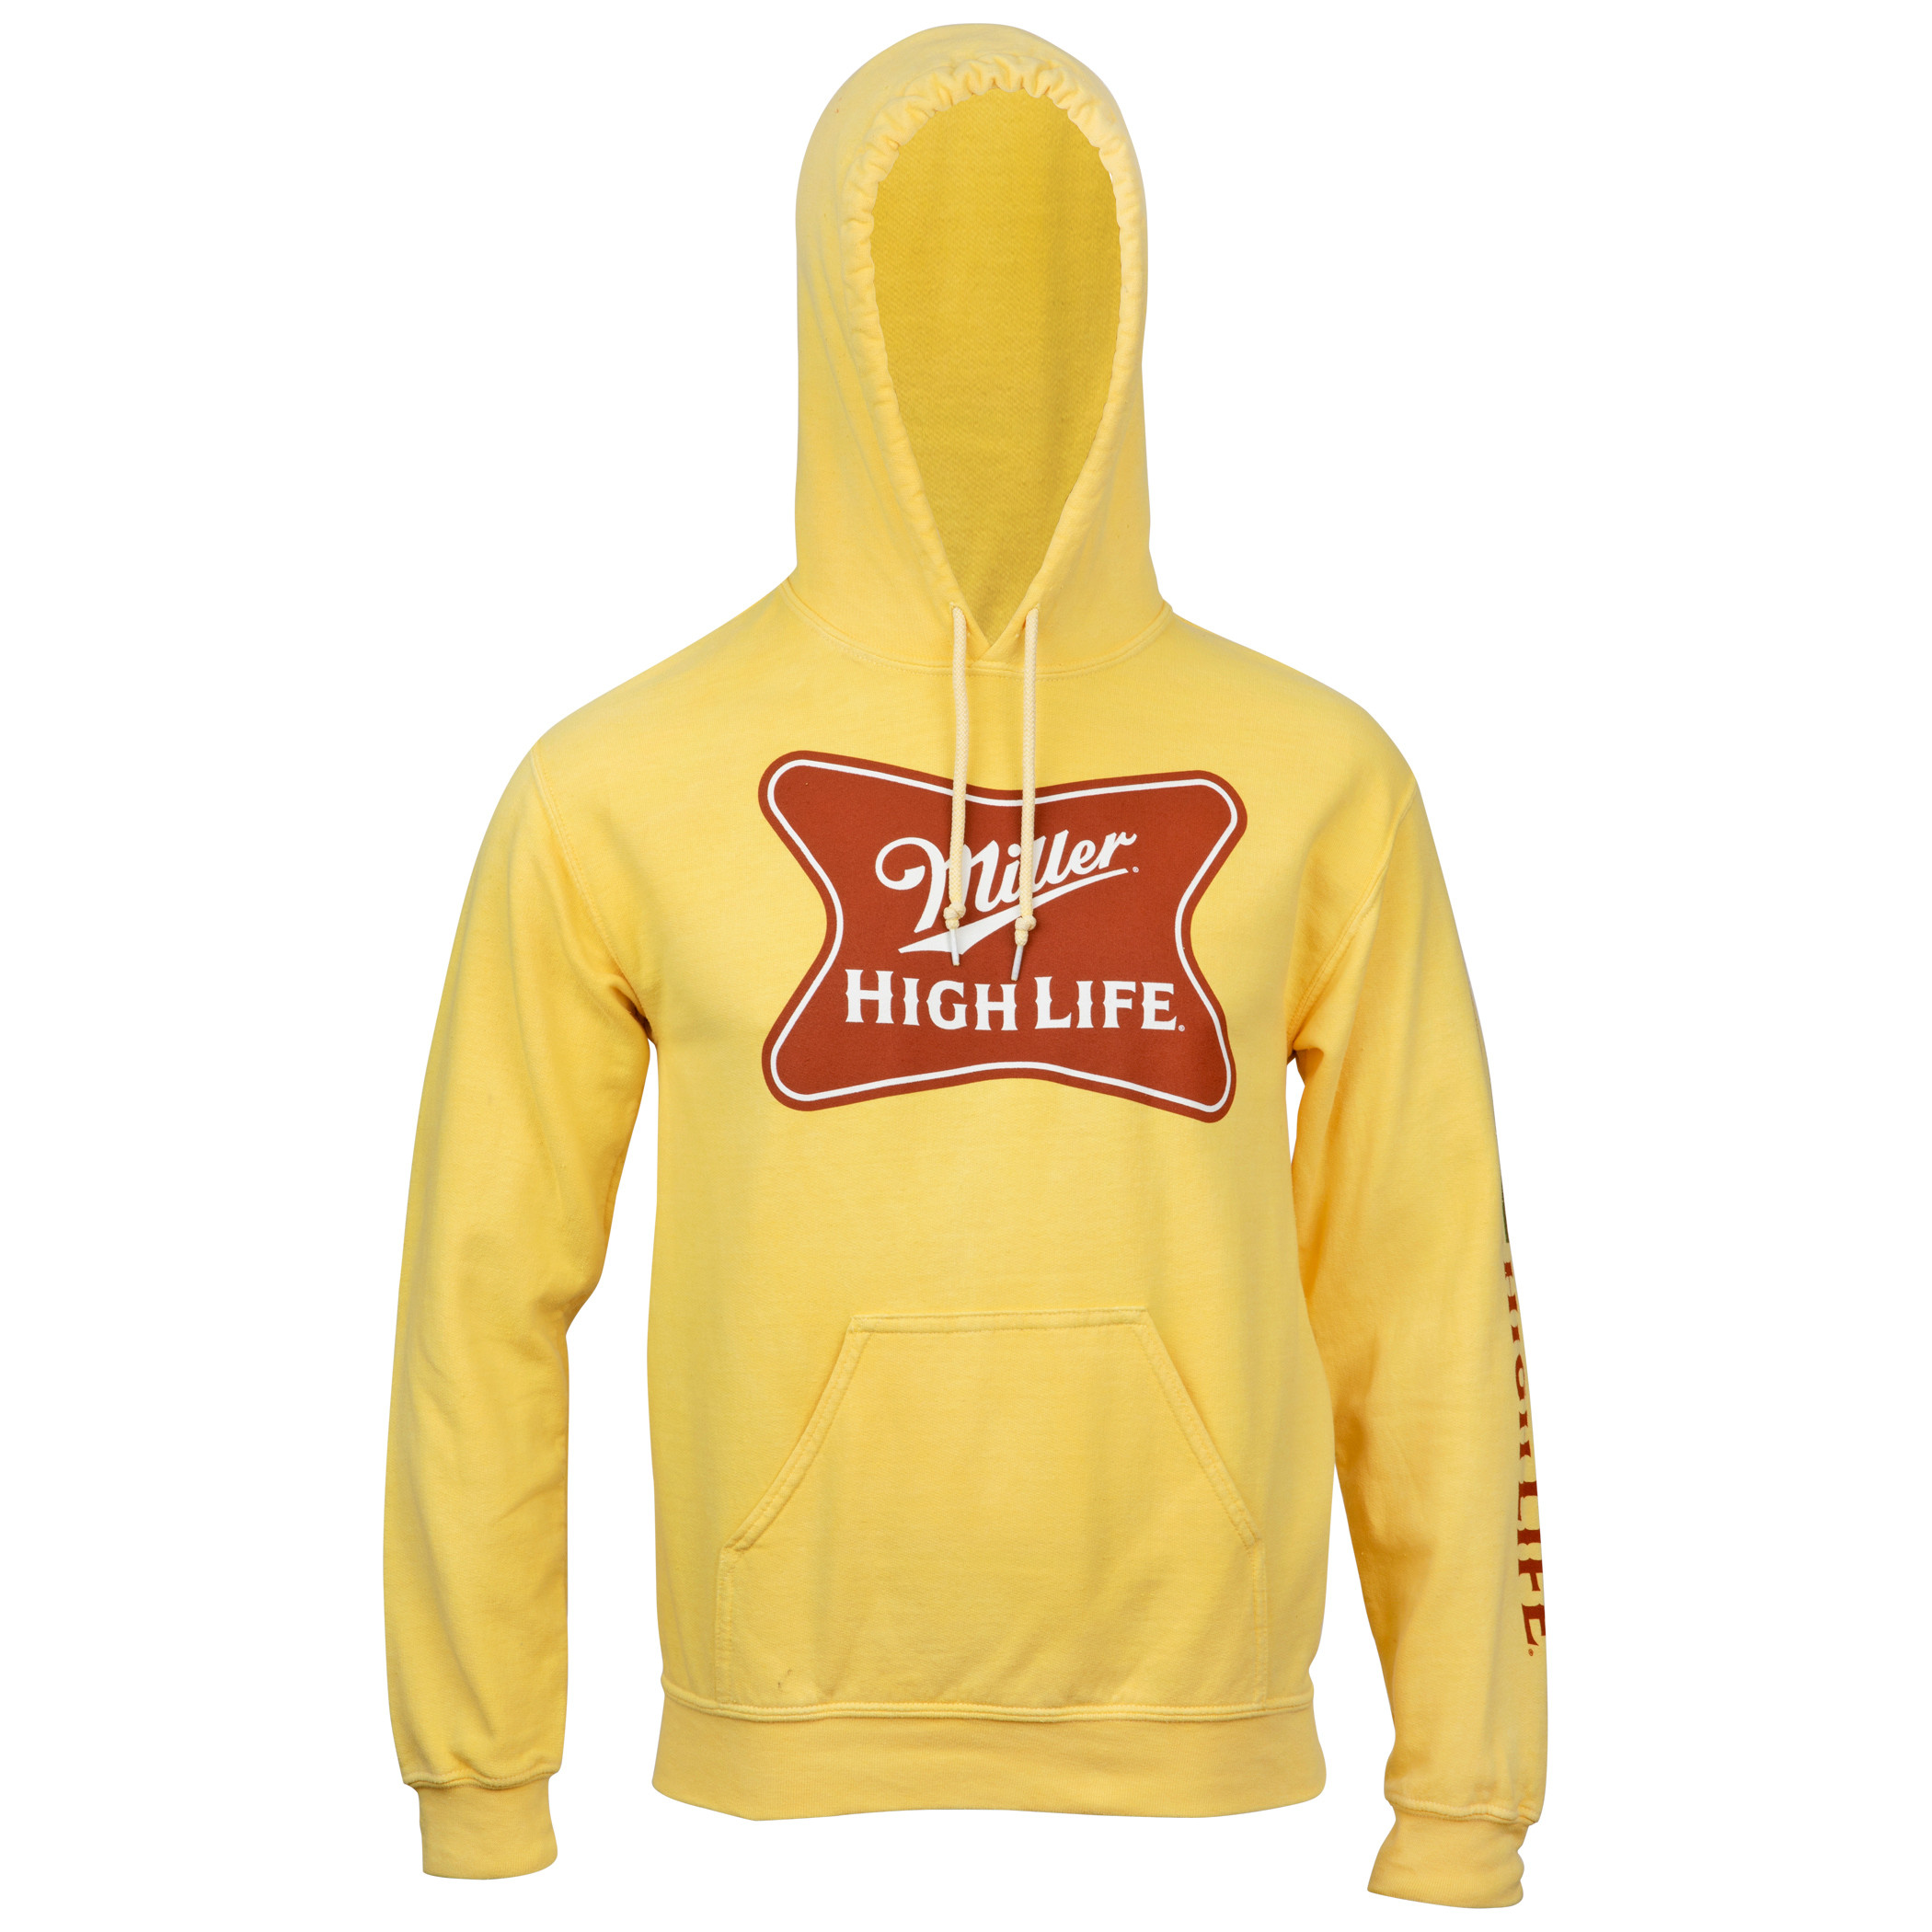 Miller High Life Logo Hoodie With High Life Sleeve Print